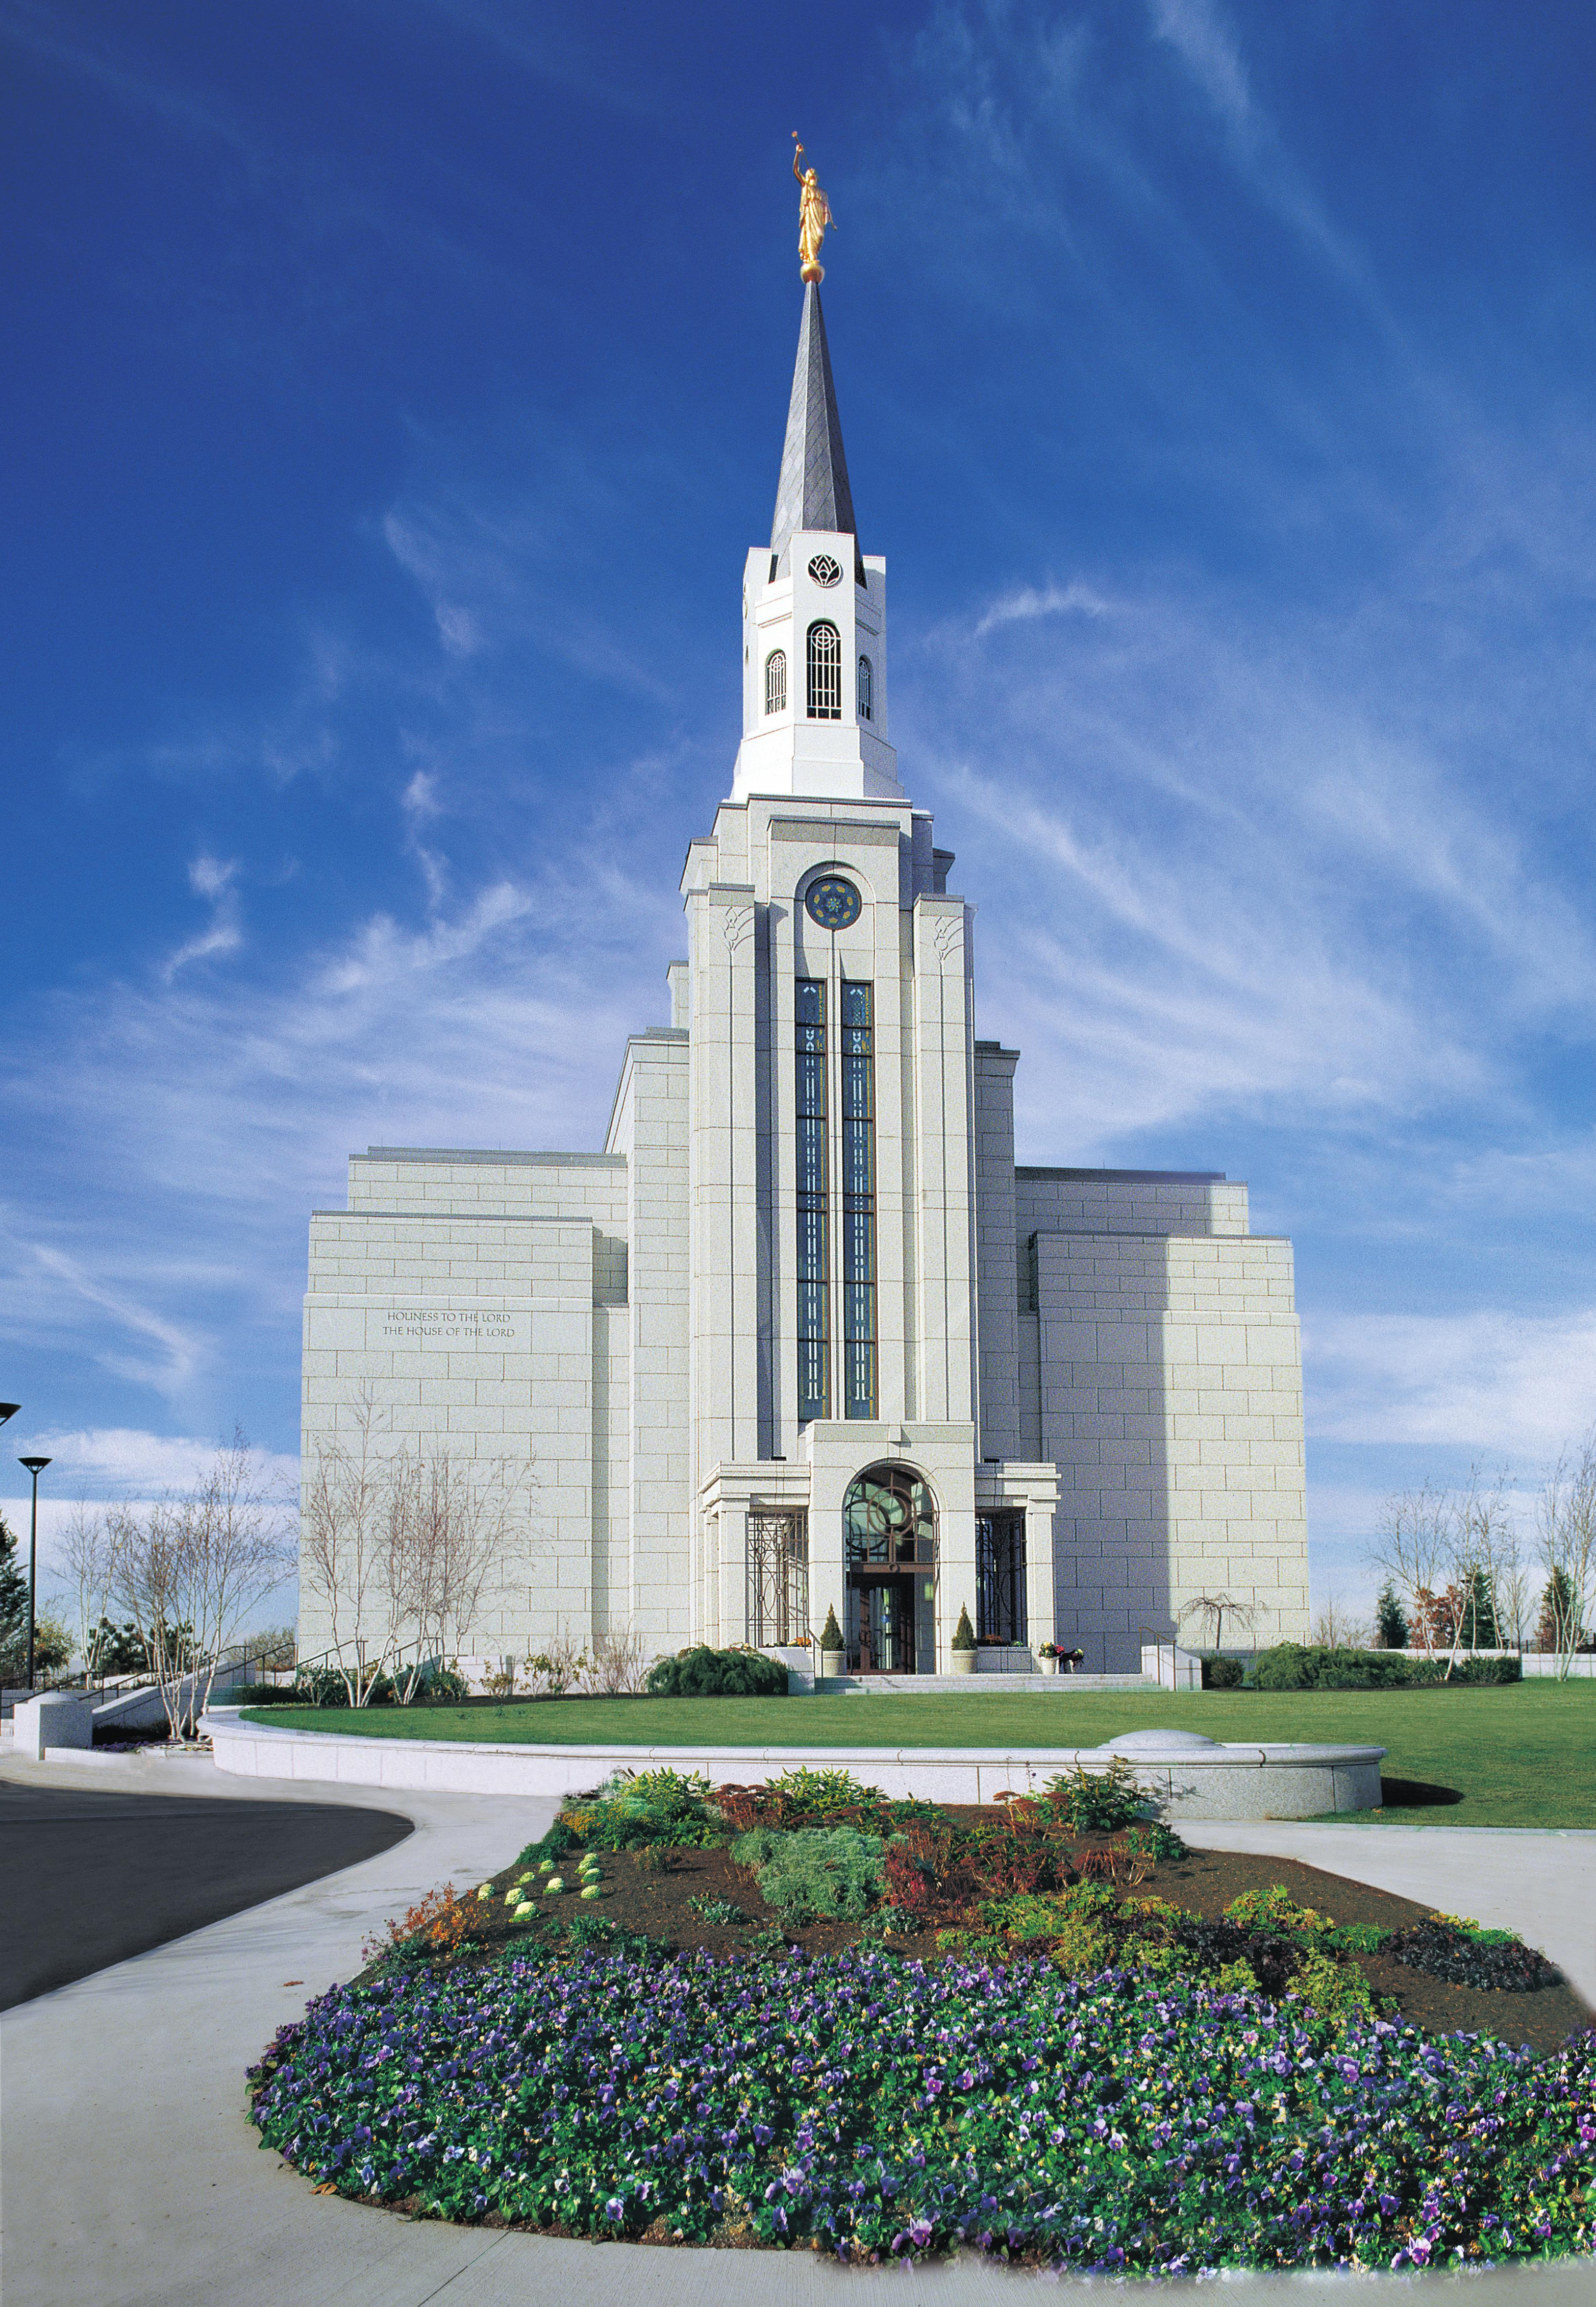 The Church of Jesus Christ of Latter-day Saints - Warden WA | 1017 S County Rd, Warden, WA, 98857 | +1 (509) 349-2361